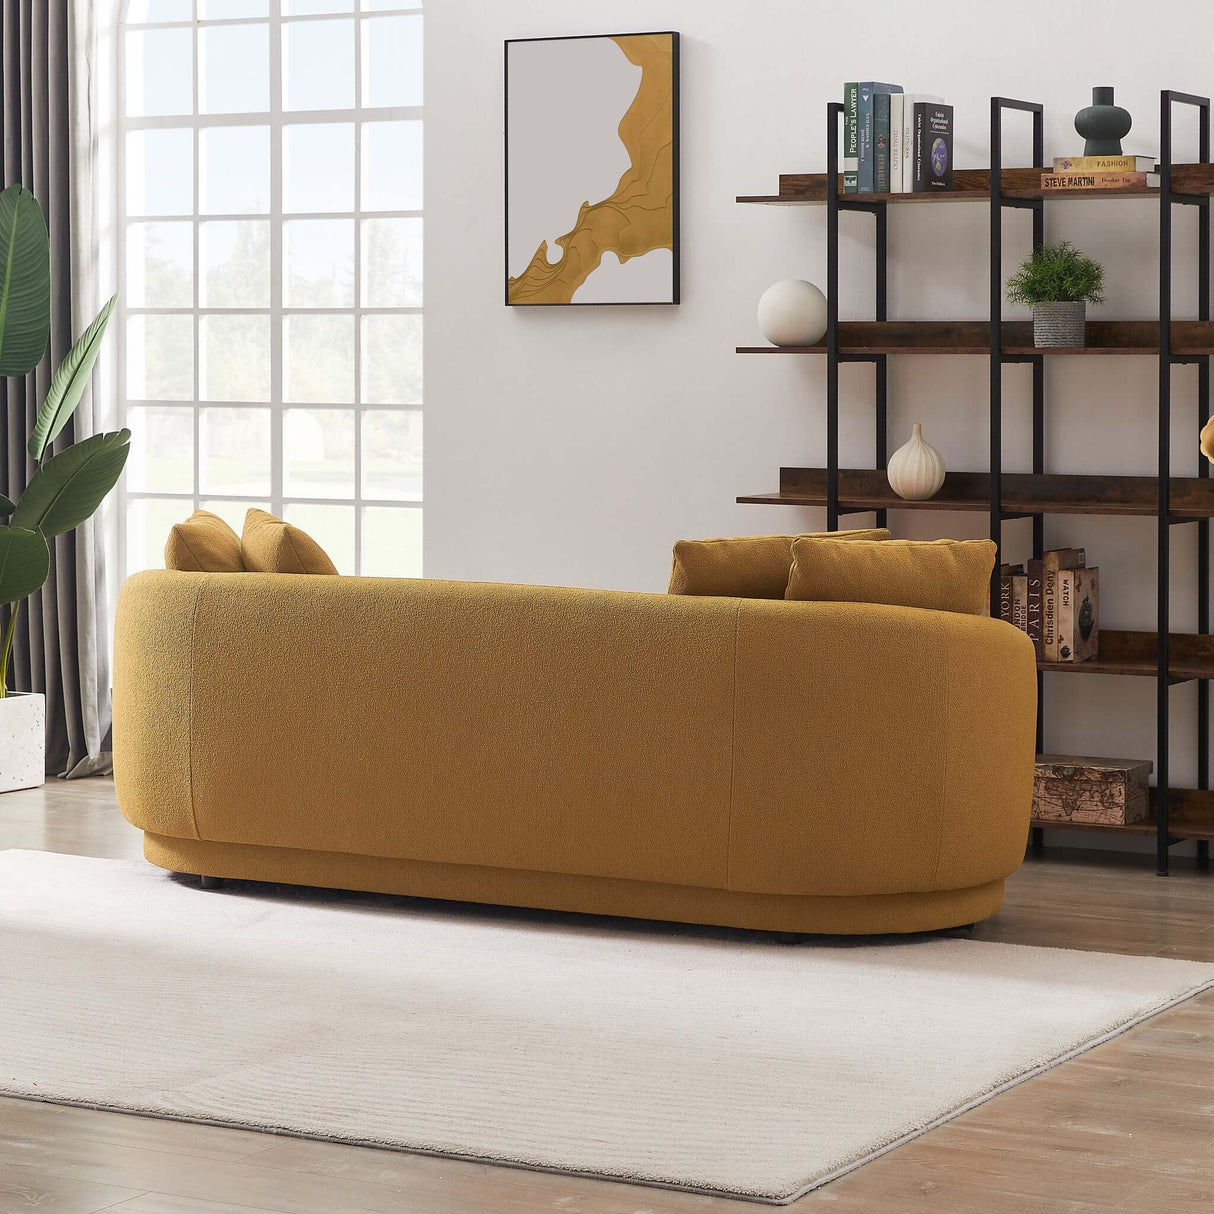 Mustard yellow velvet sofa